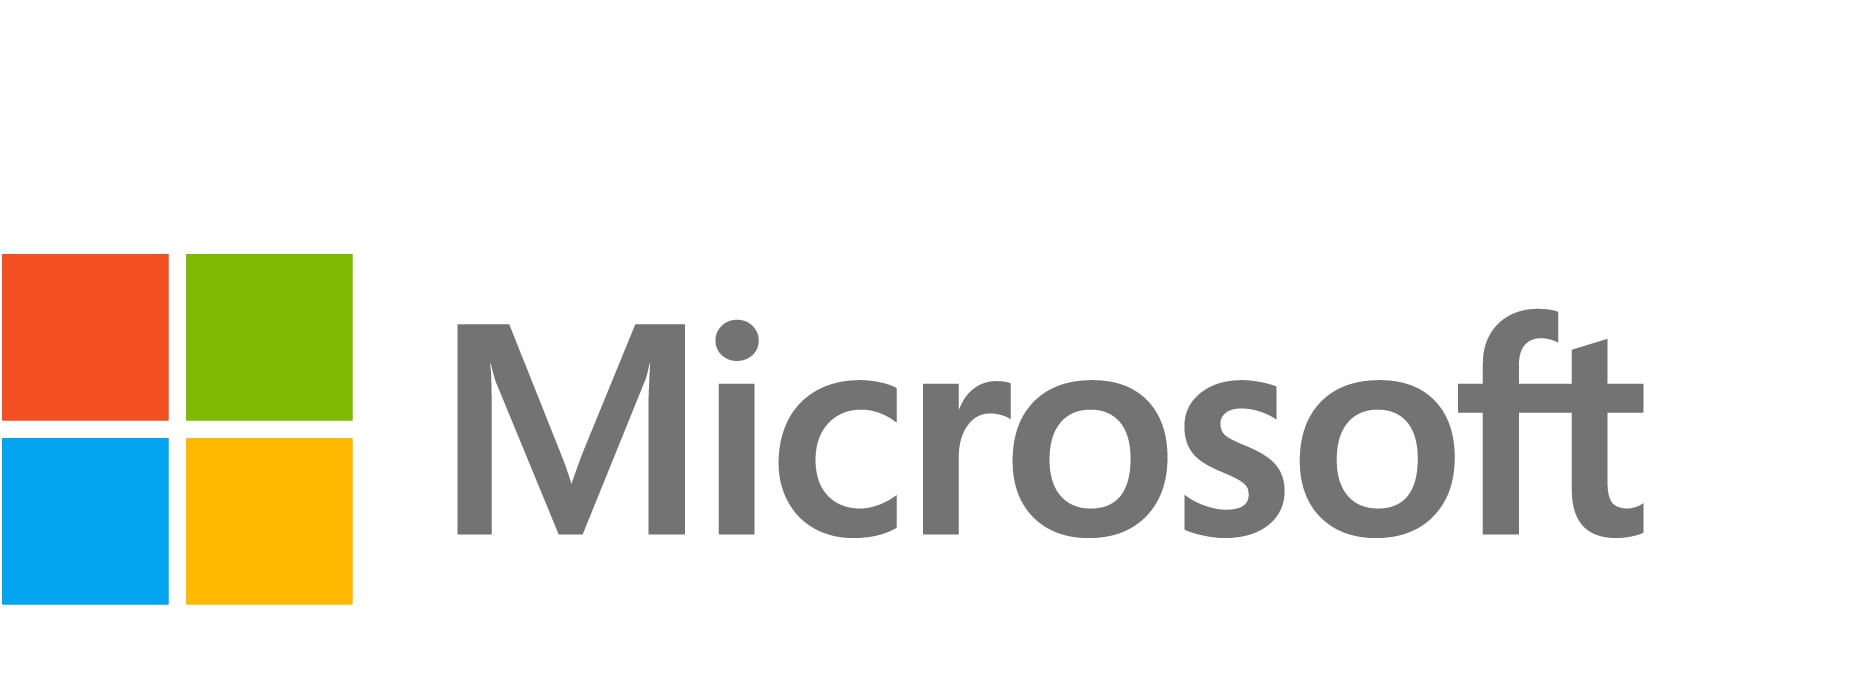 Microsoft Core Infrastructure Server Suite Datacenter - transition license